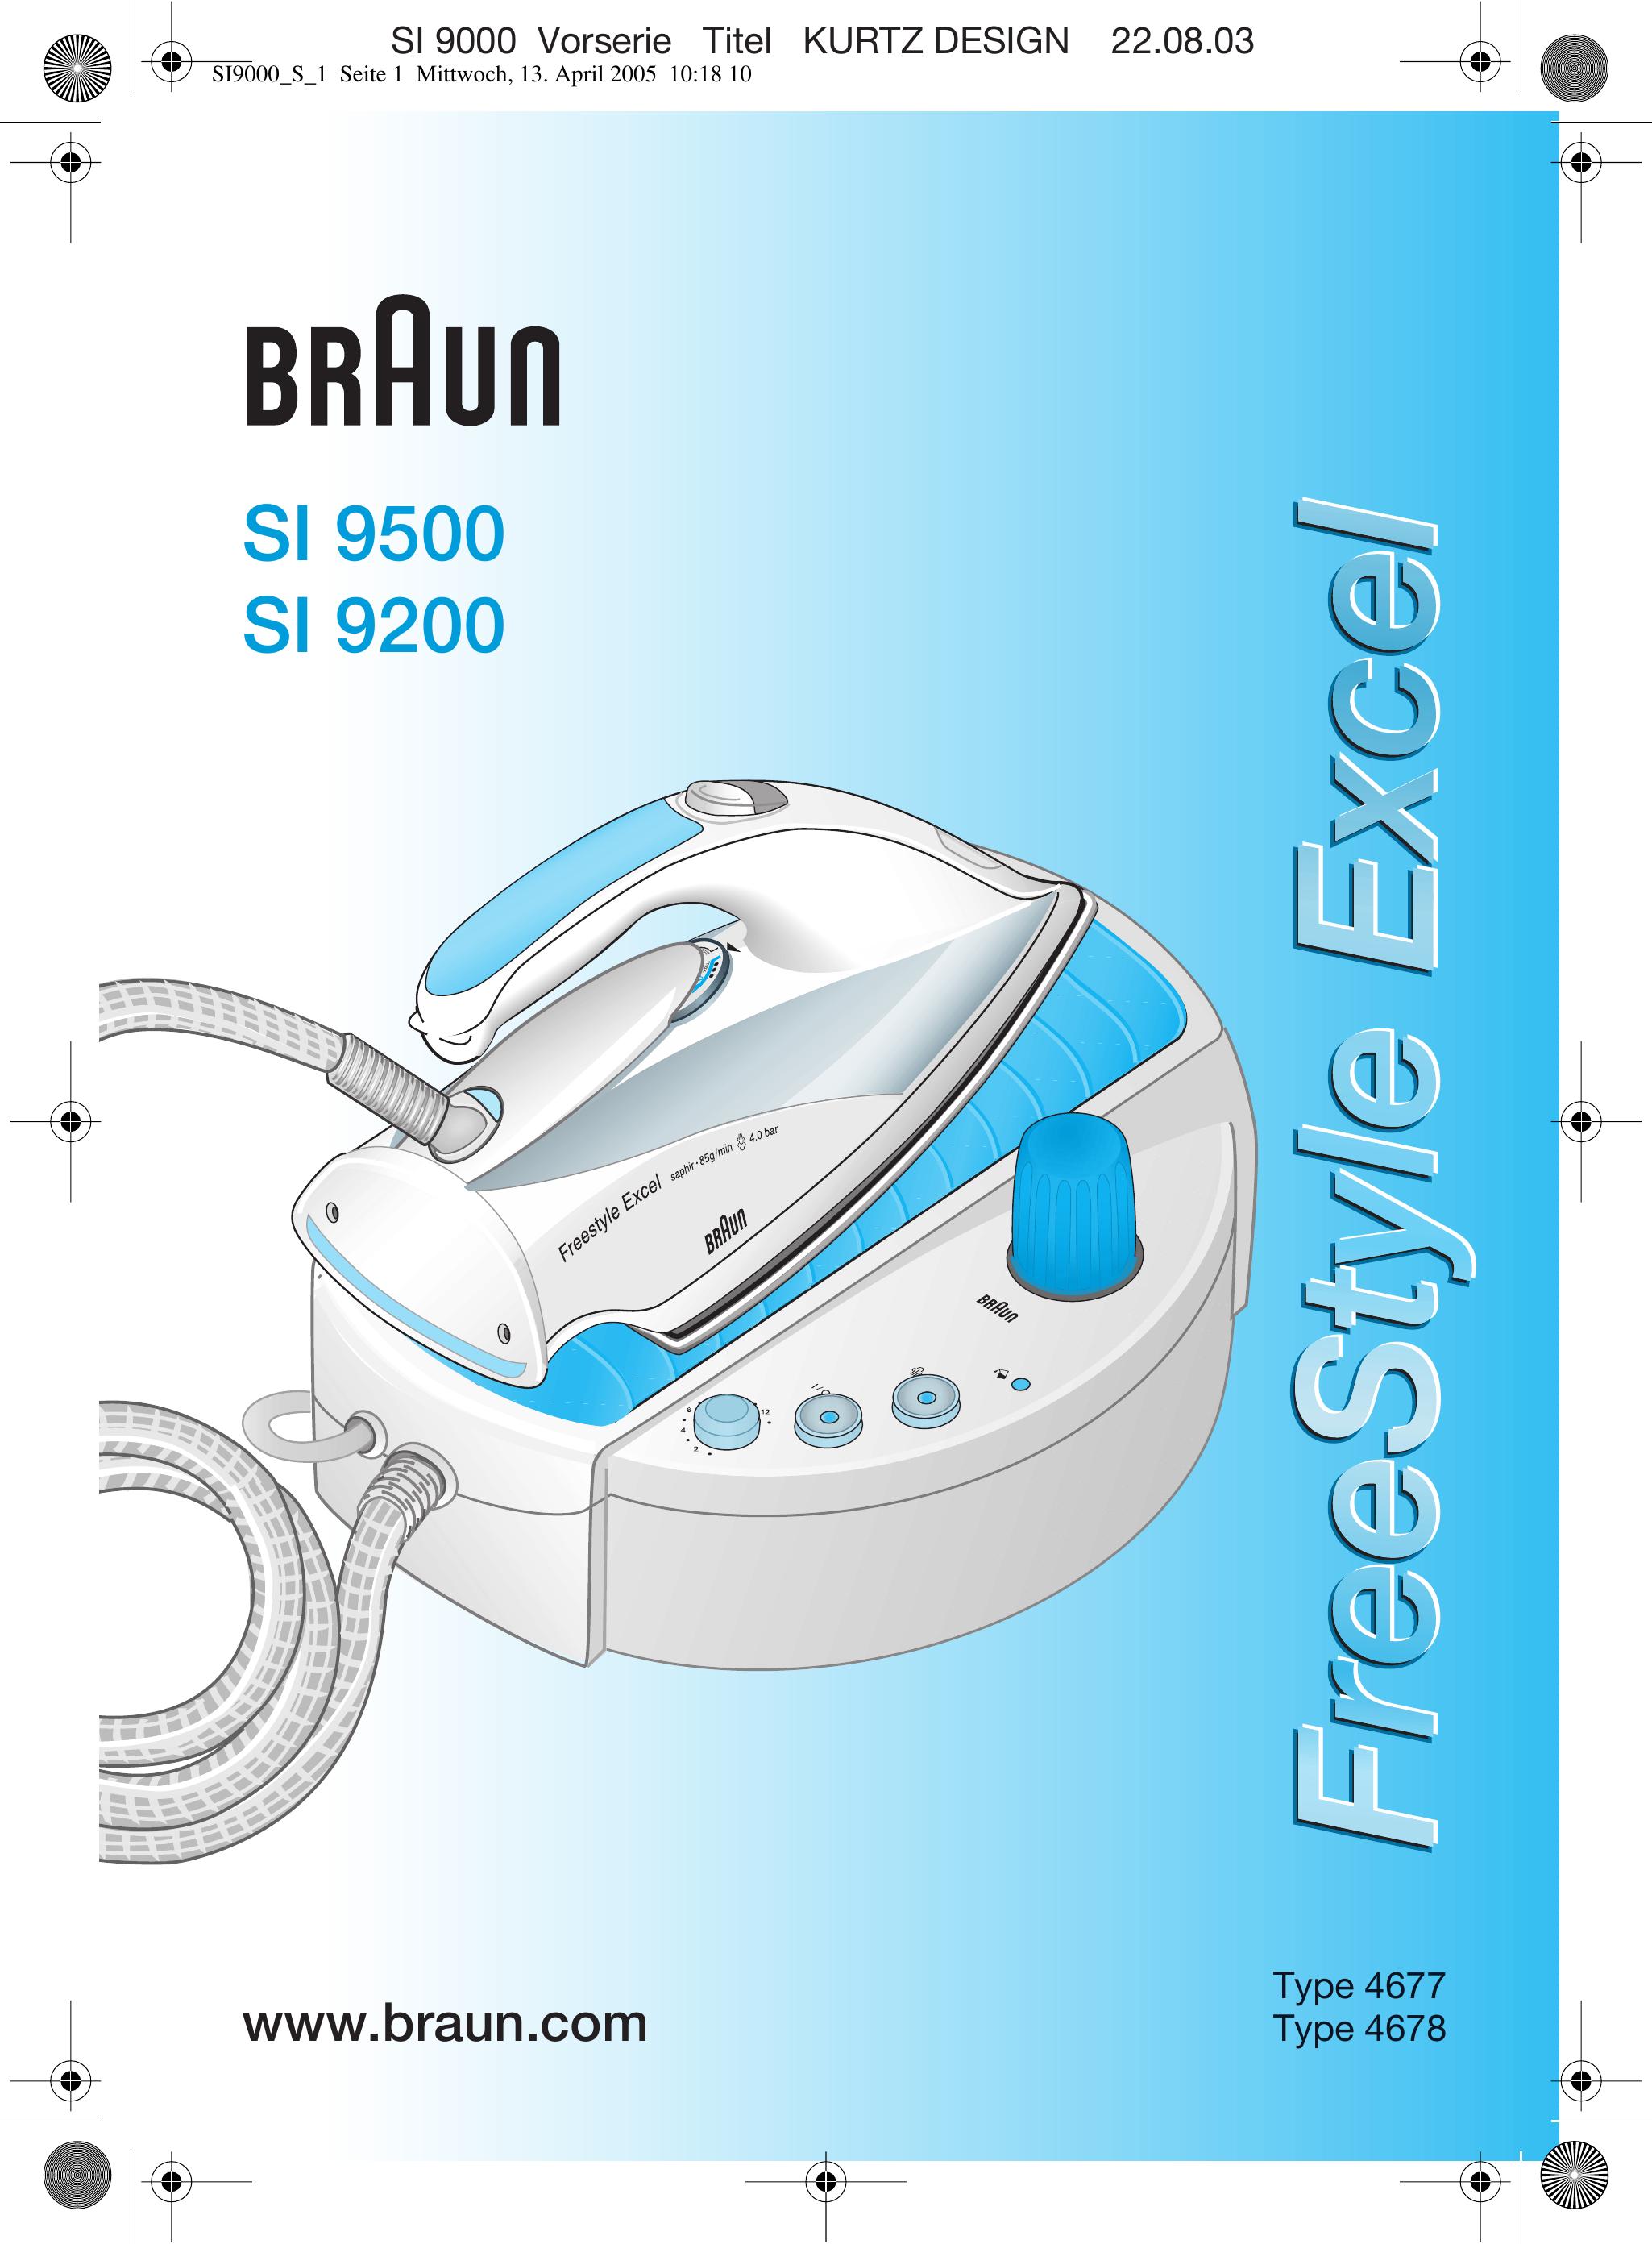 Braun 4678 Iron User Manual